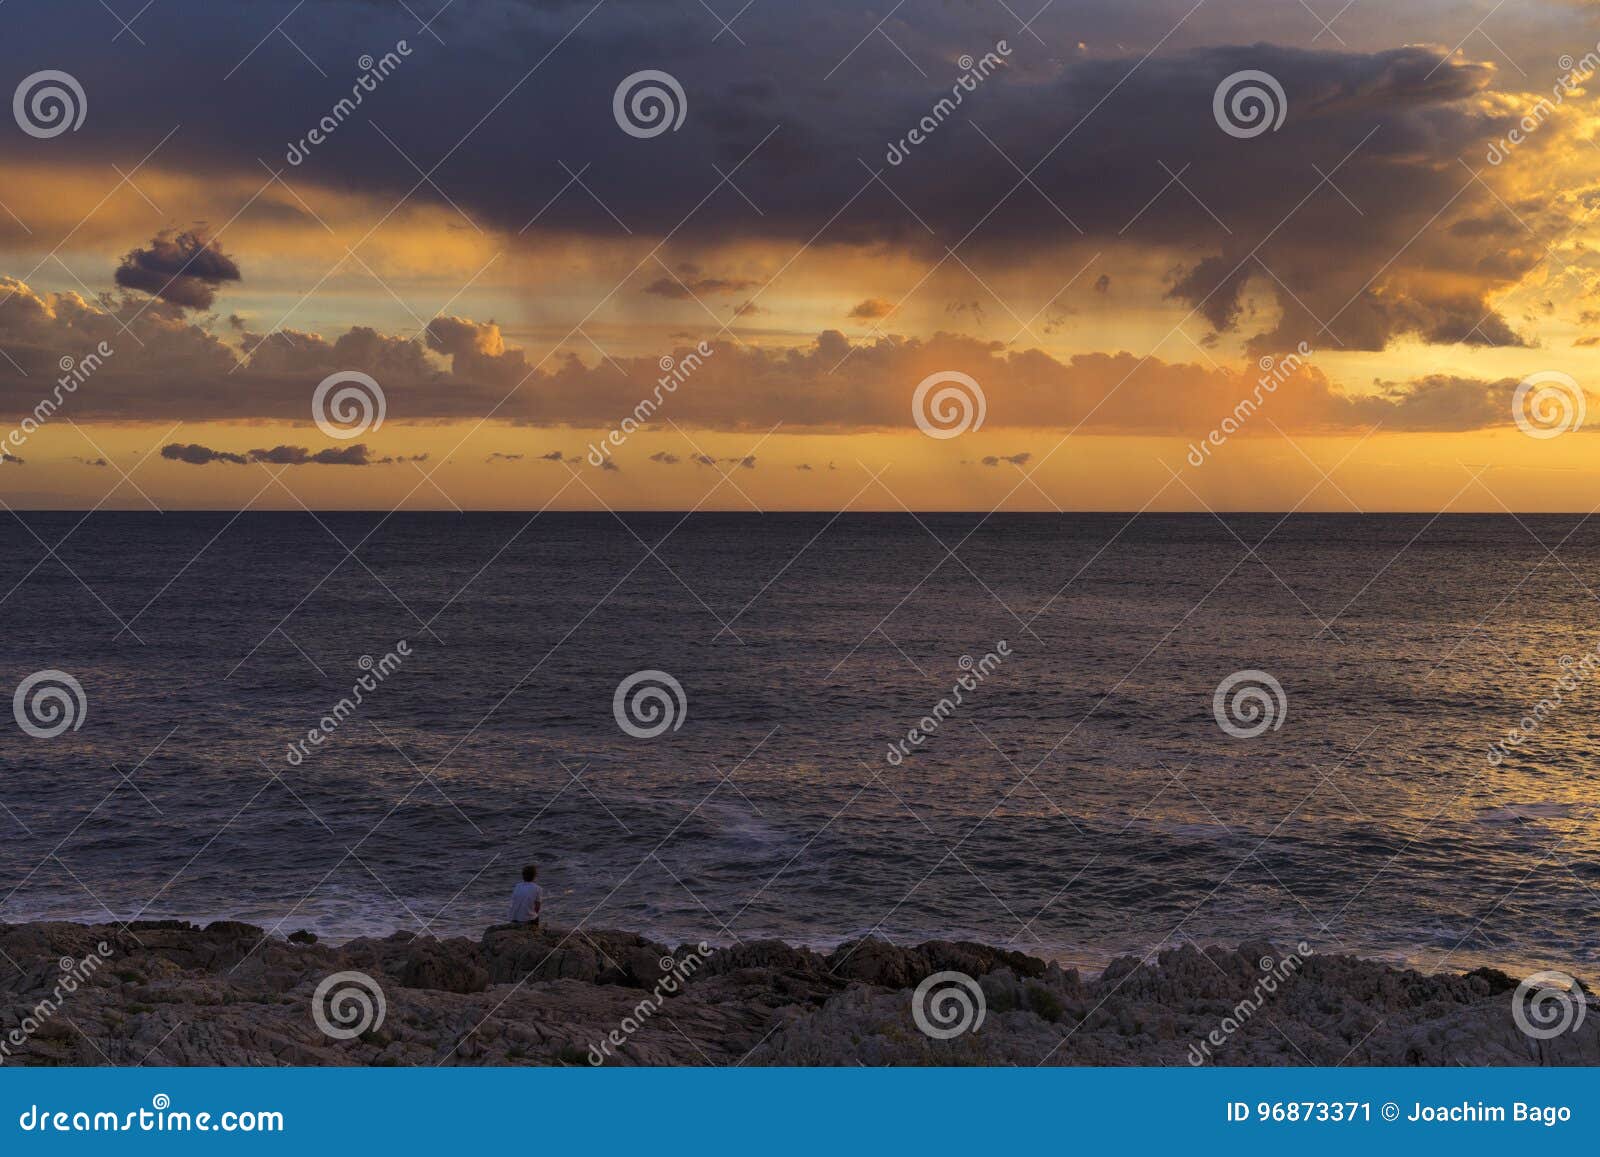 Beautiful Sunset In Croatia At Adriatic Sea Stock Image Image Of